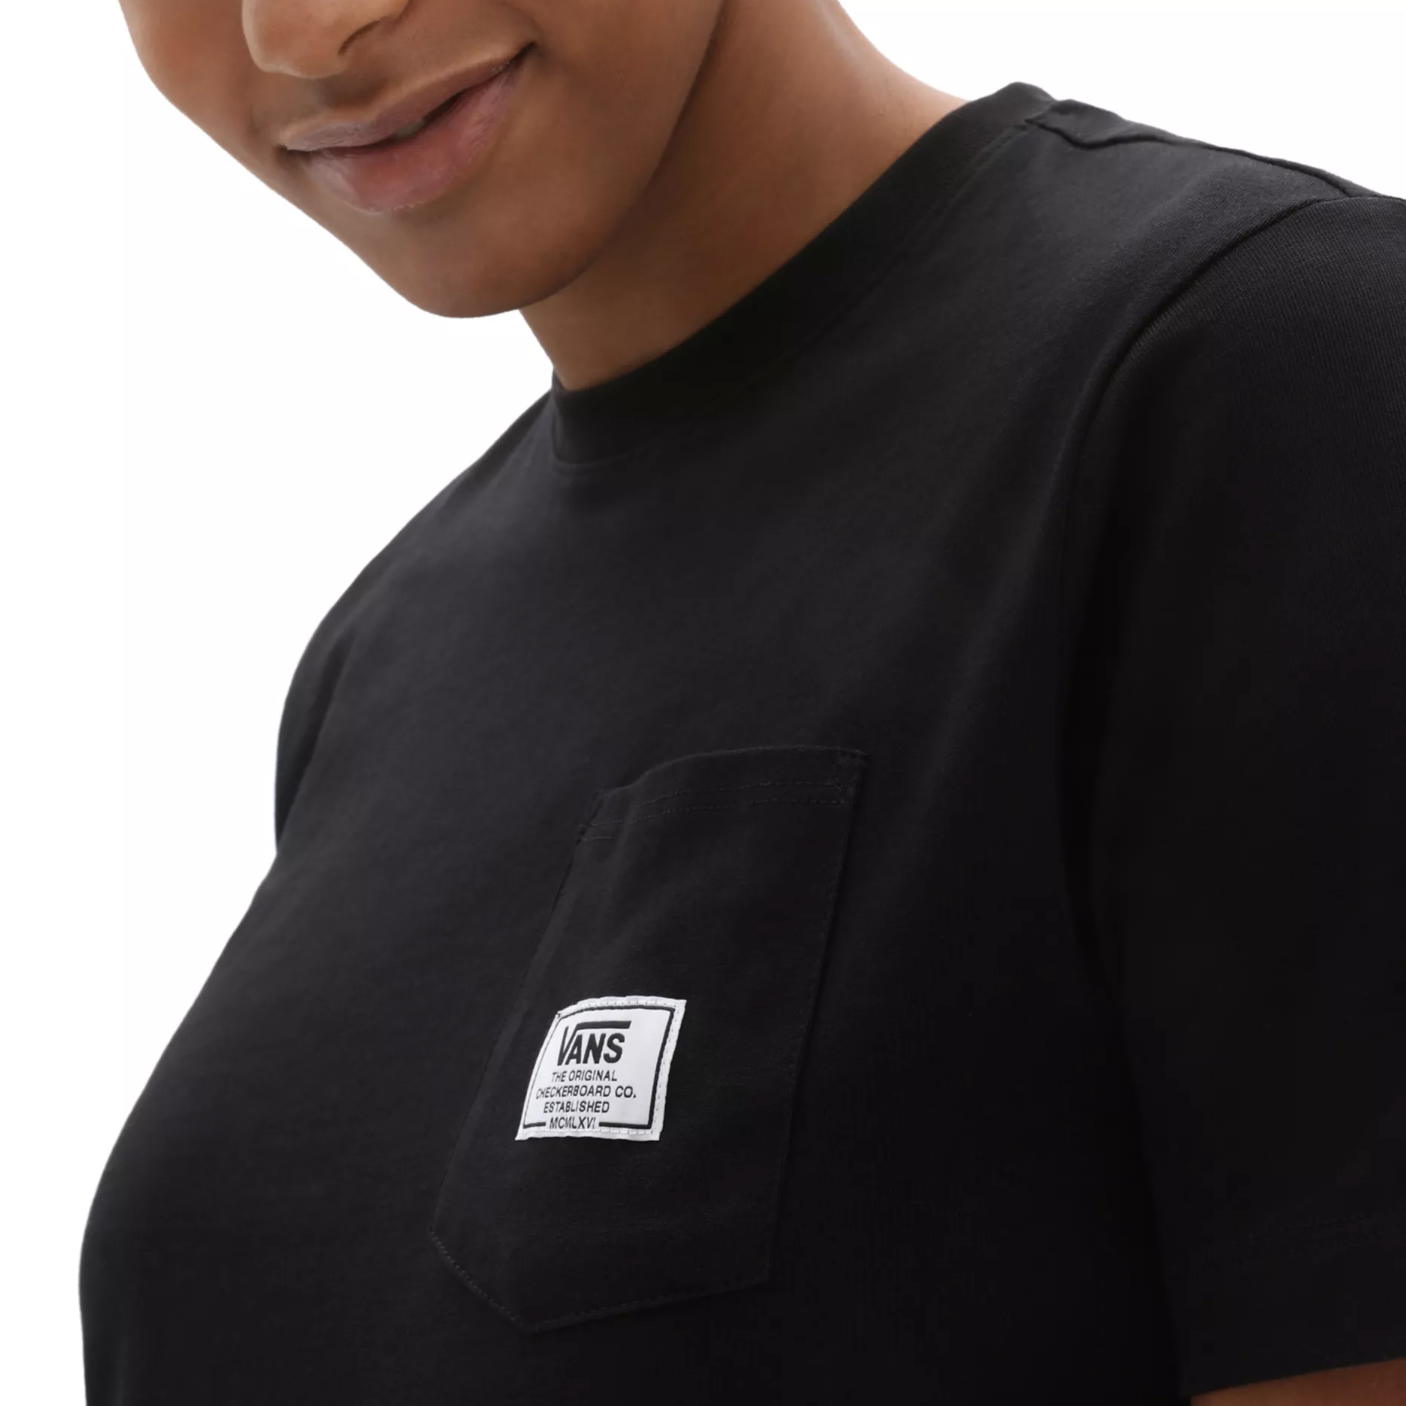 Womens Classic Patch Pocket T-shirt Black